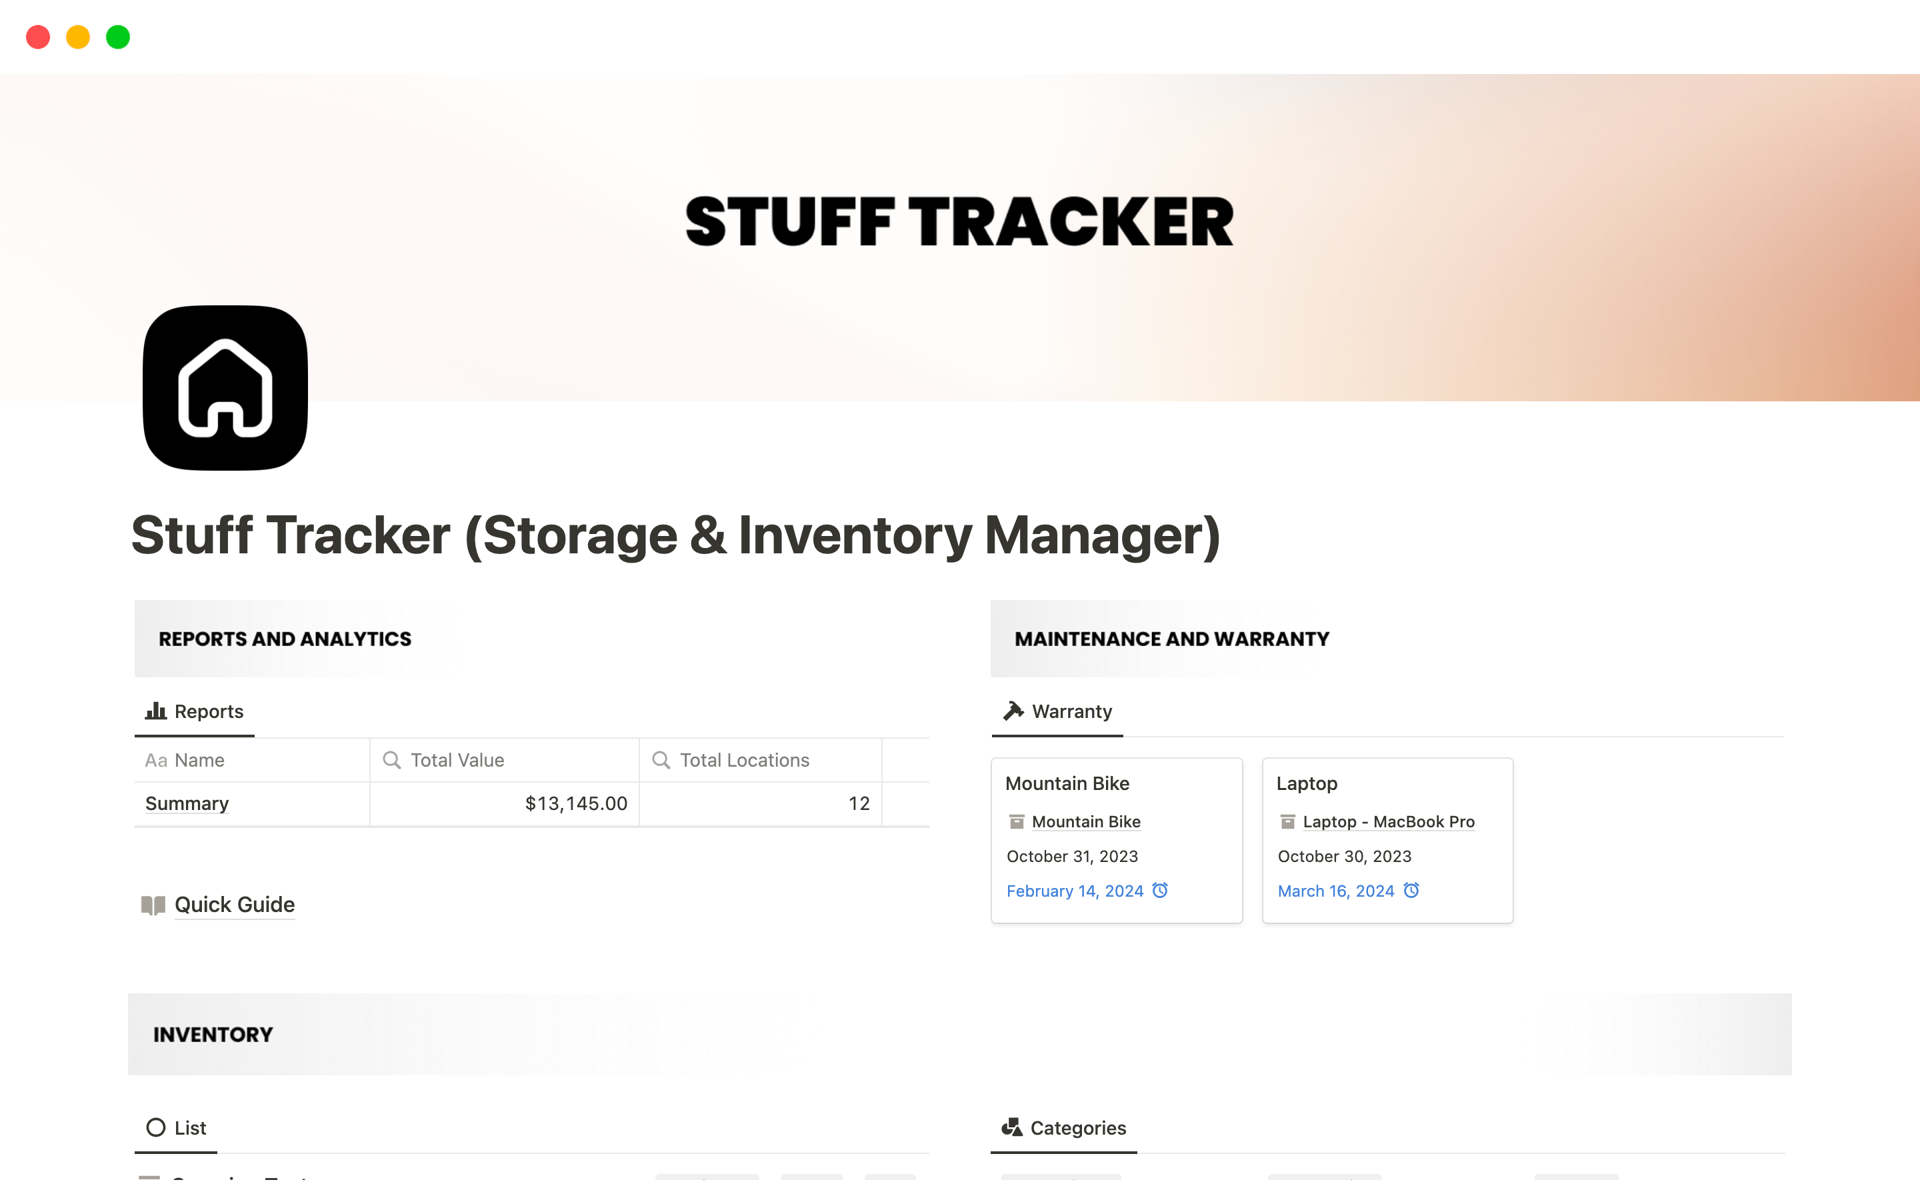 Vista previa de una plantilla para Stuff Tracker (Storage & Inventory Manager)